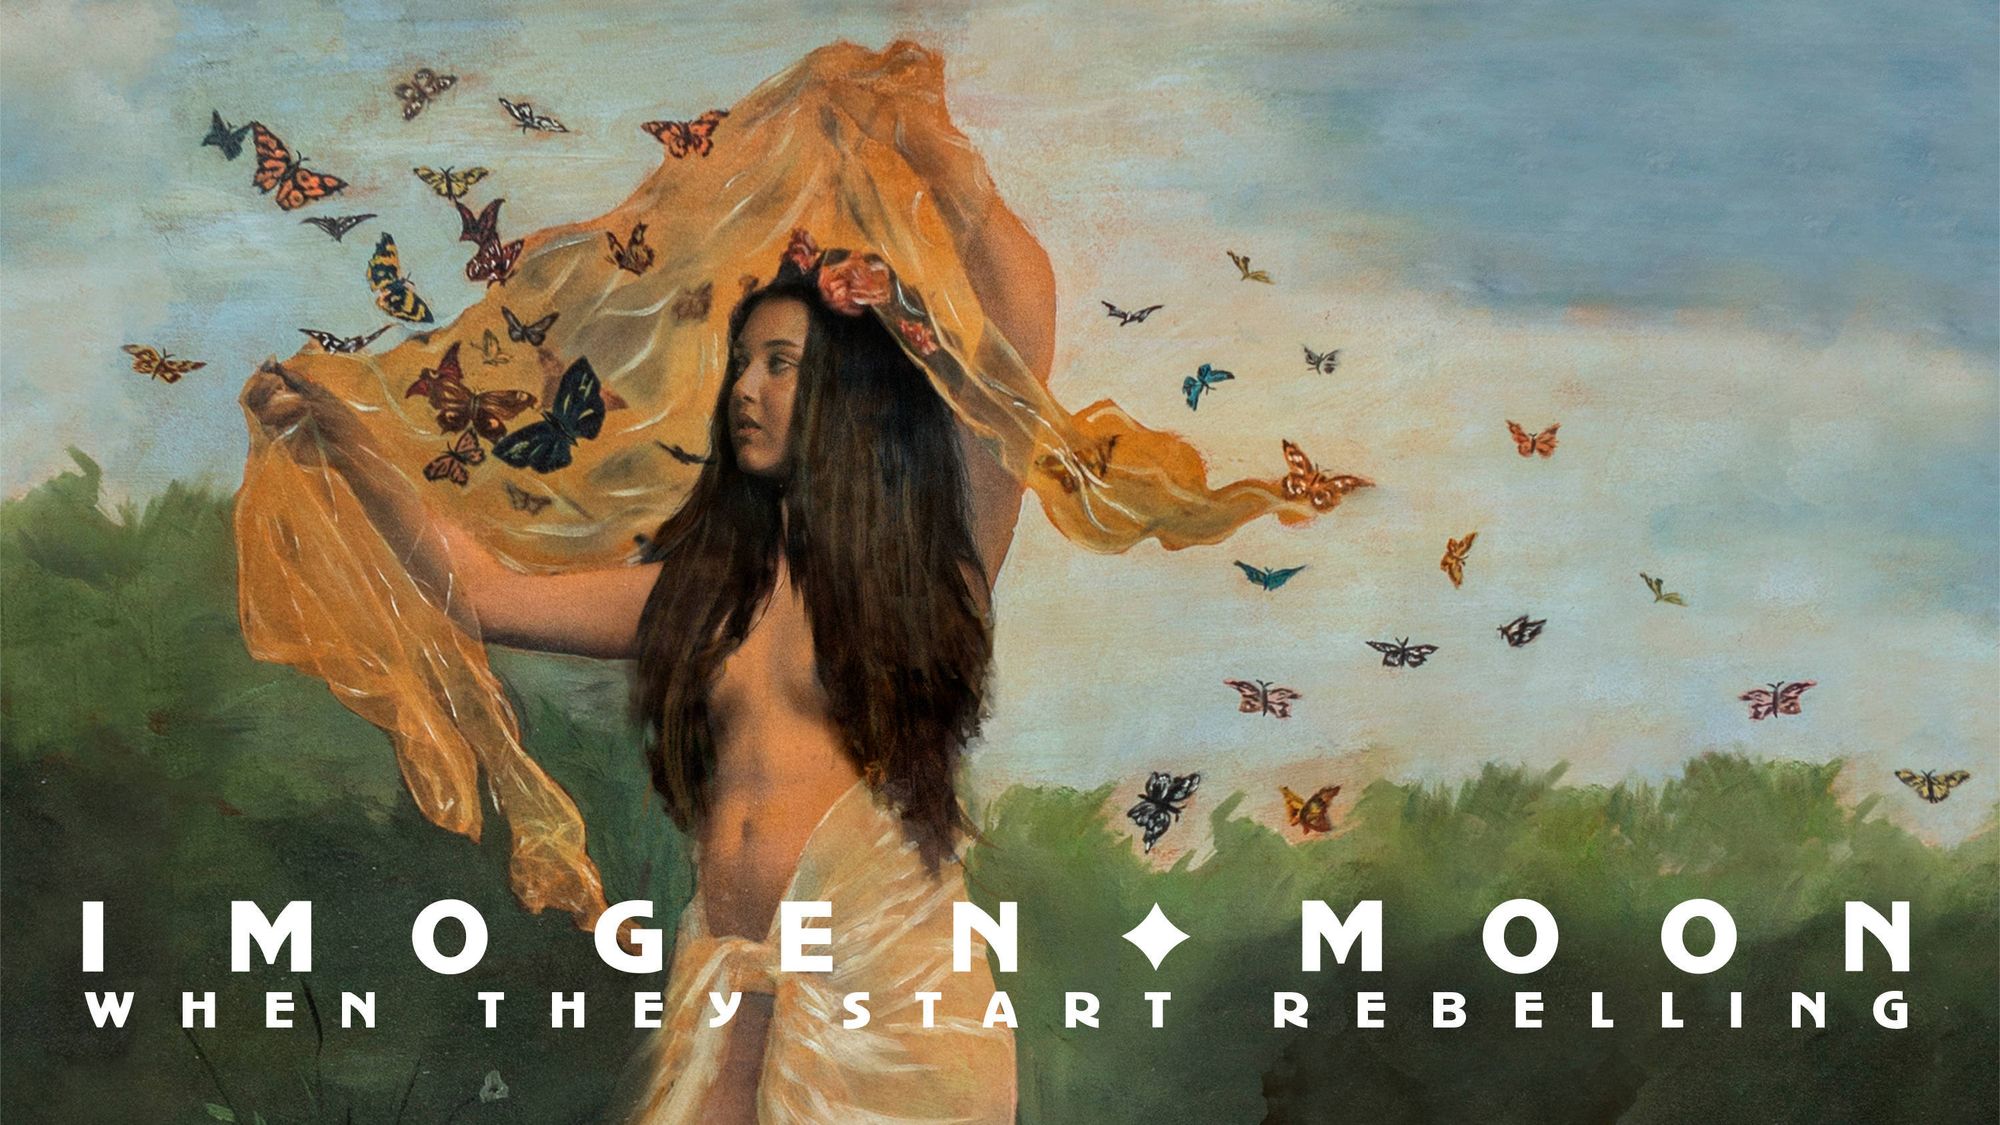 Imogen Moon: When They Start Rebelling